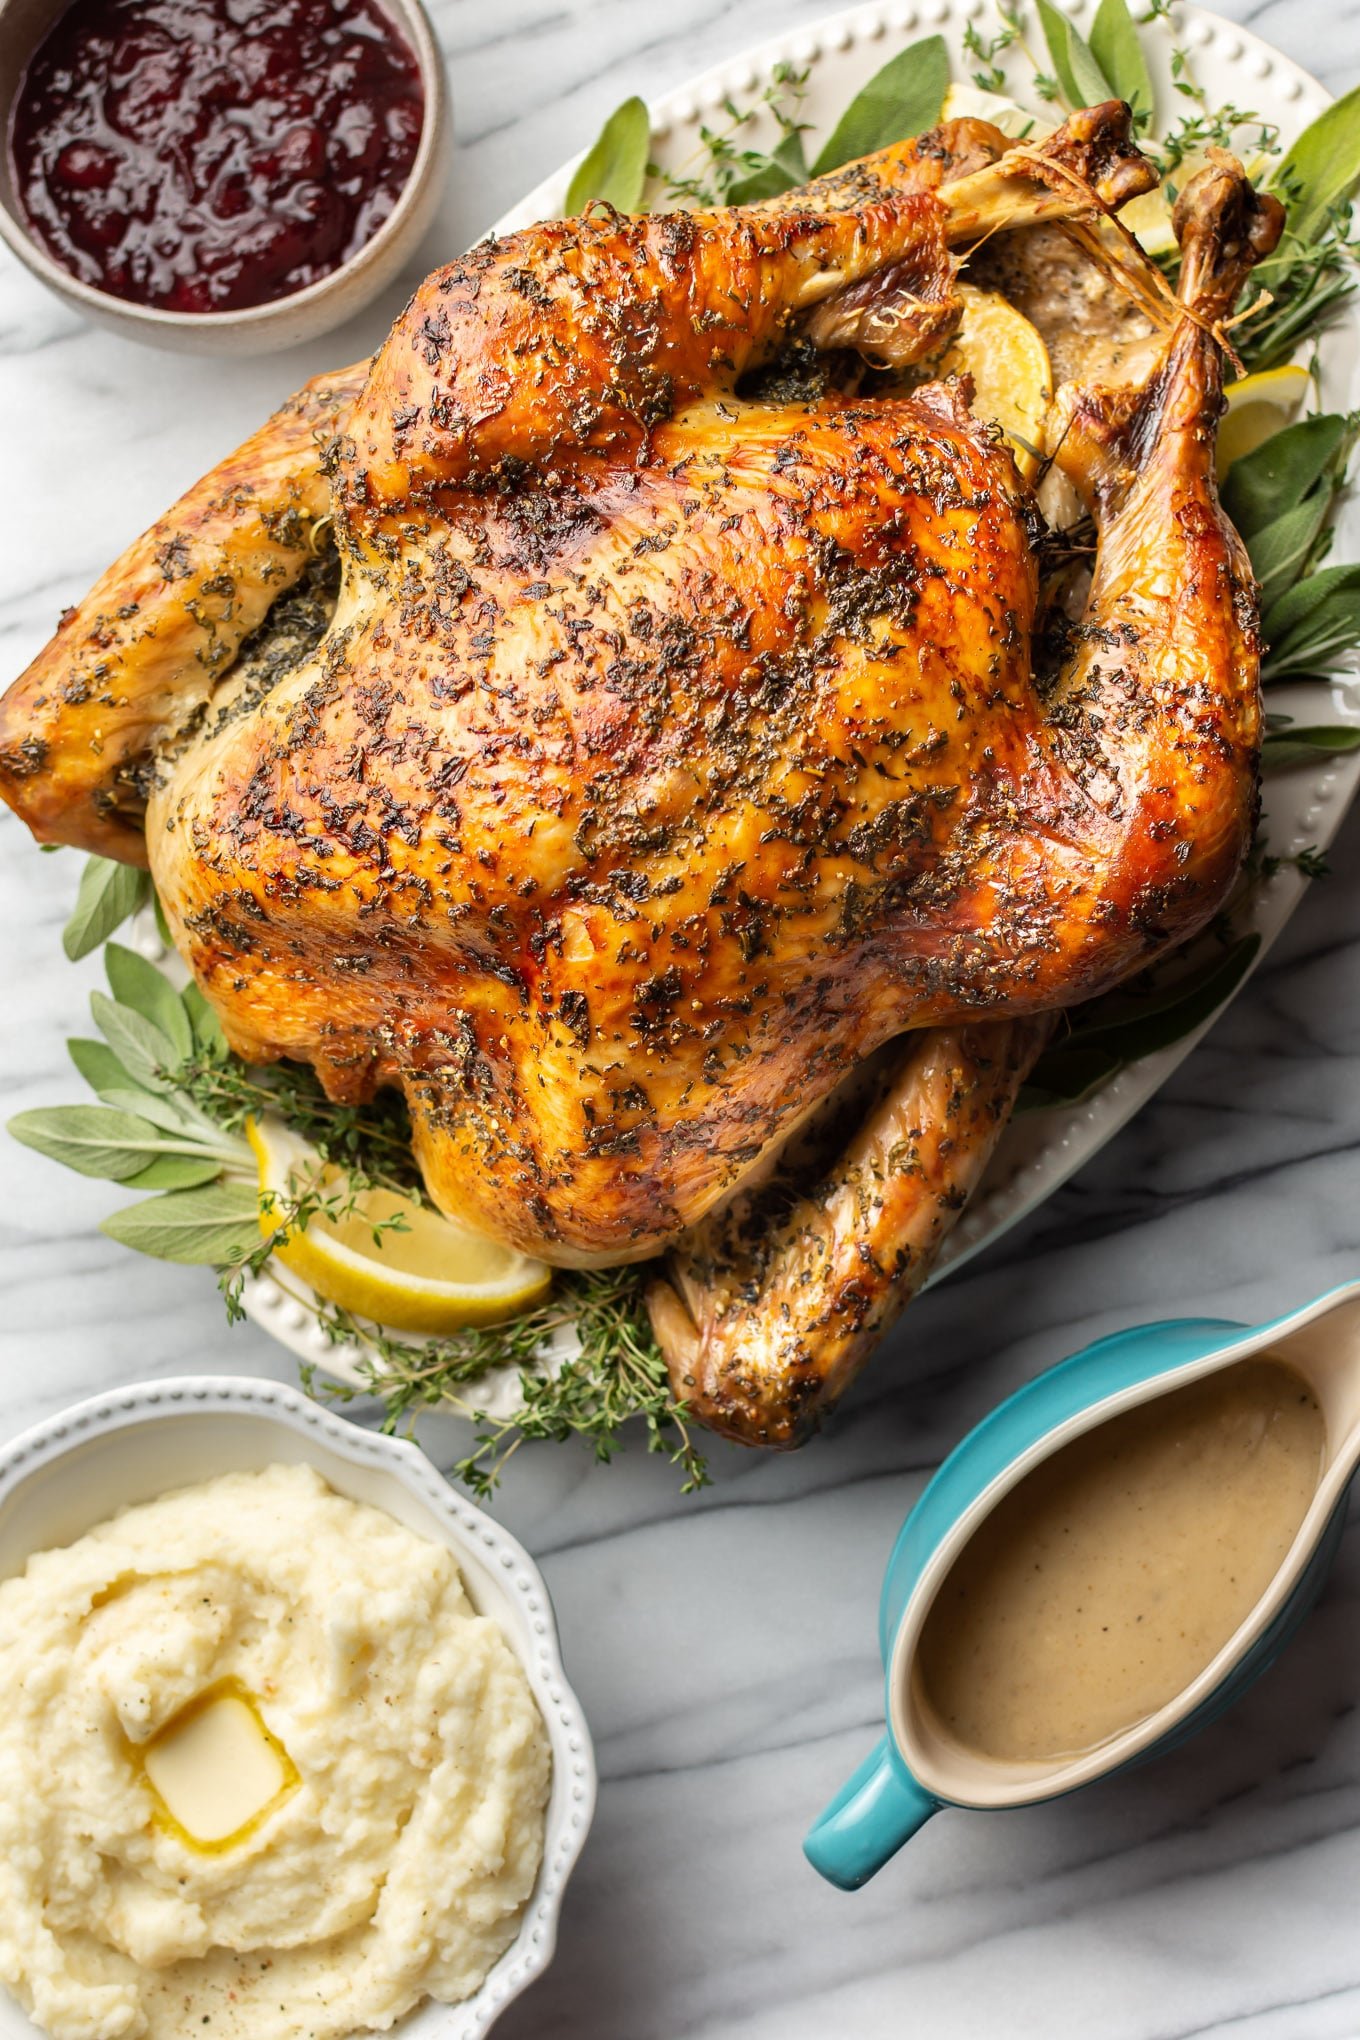 https://www.saltandlavender.com/wp-content/uploads/2021/11/roast-turkey-recipe-2.jpg